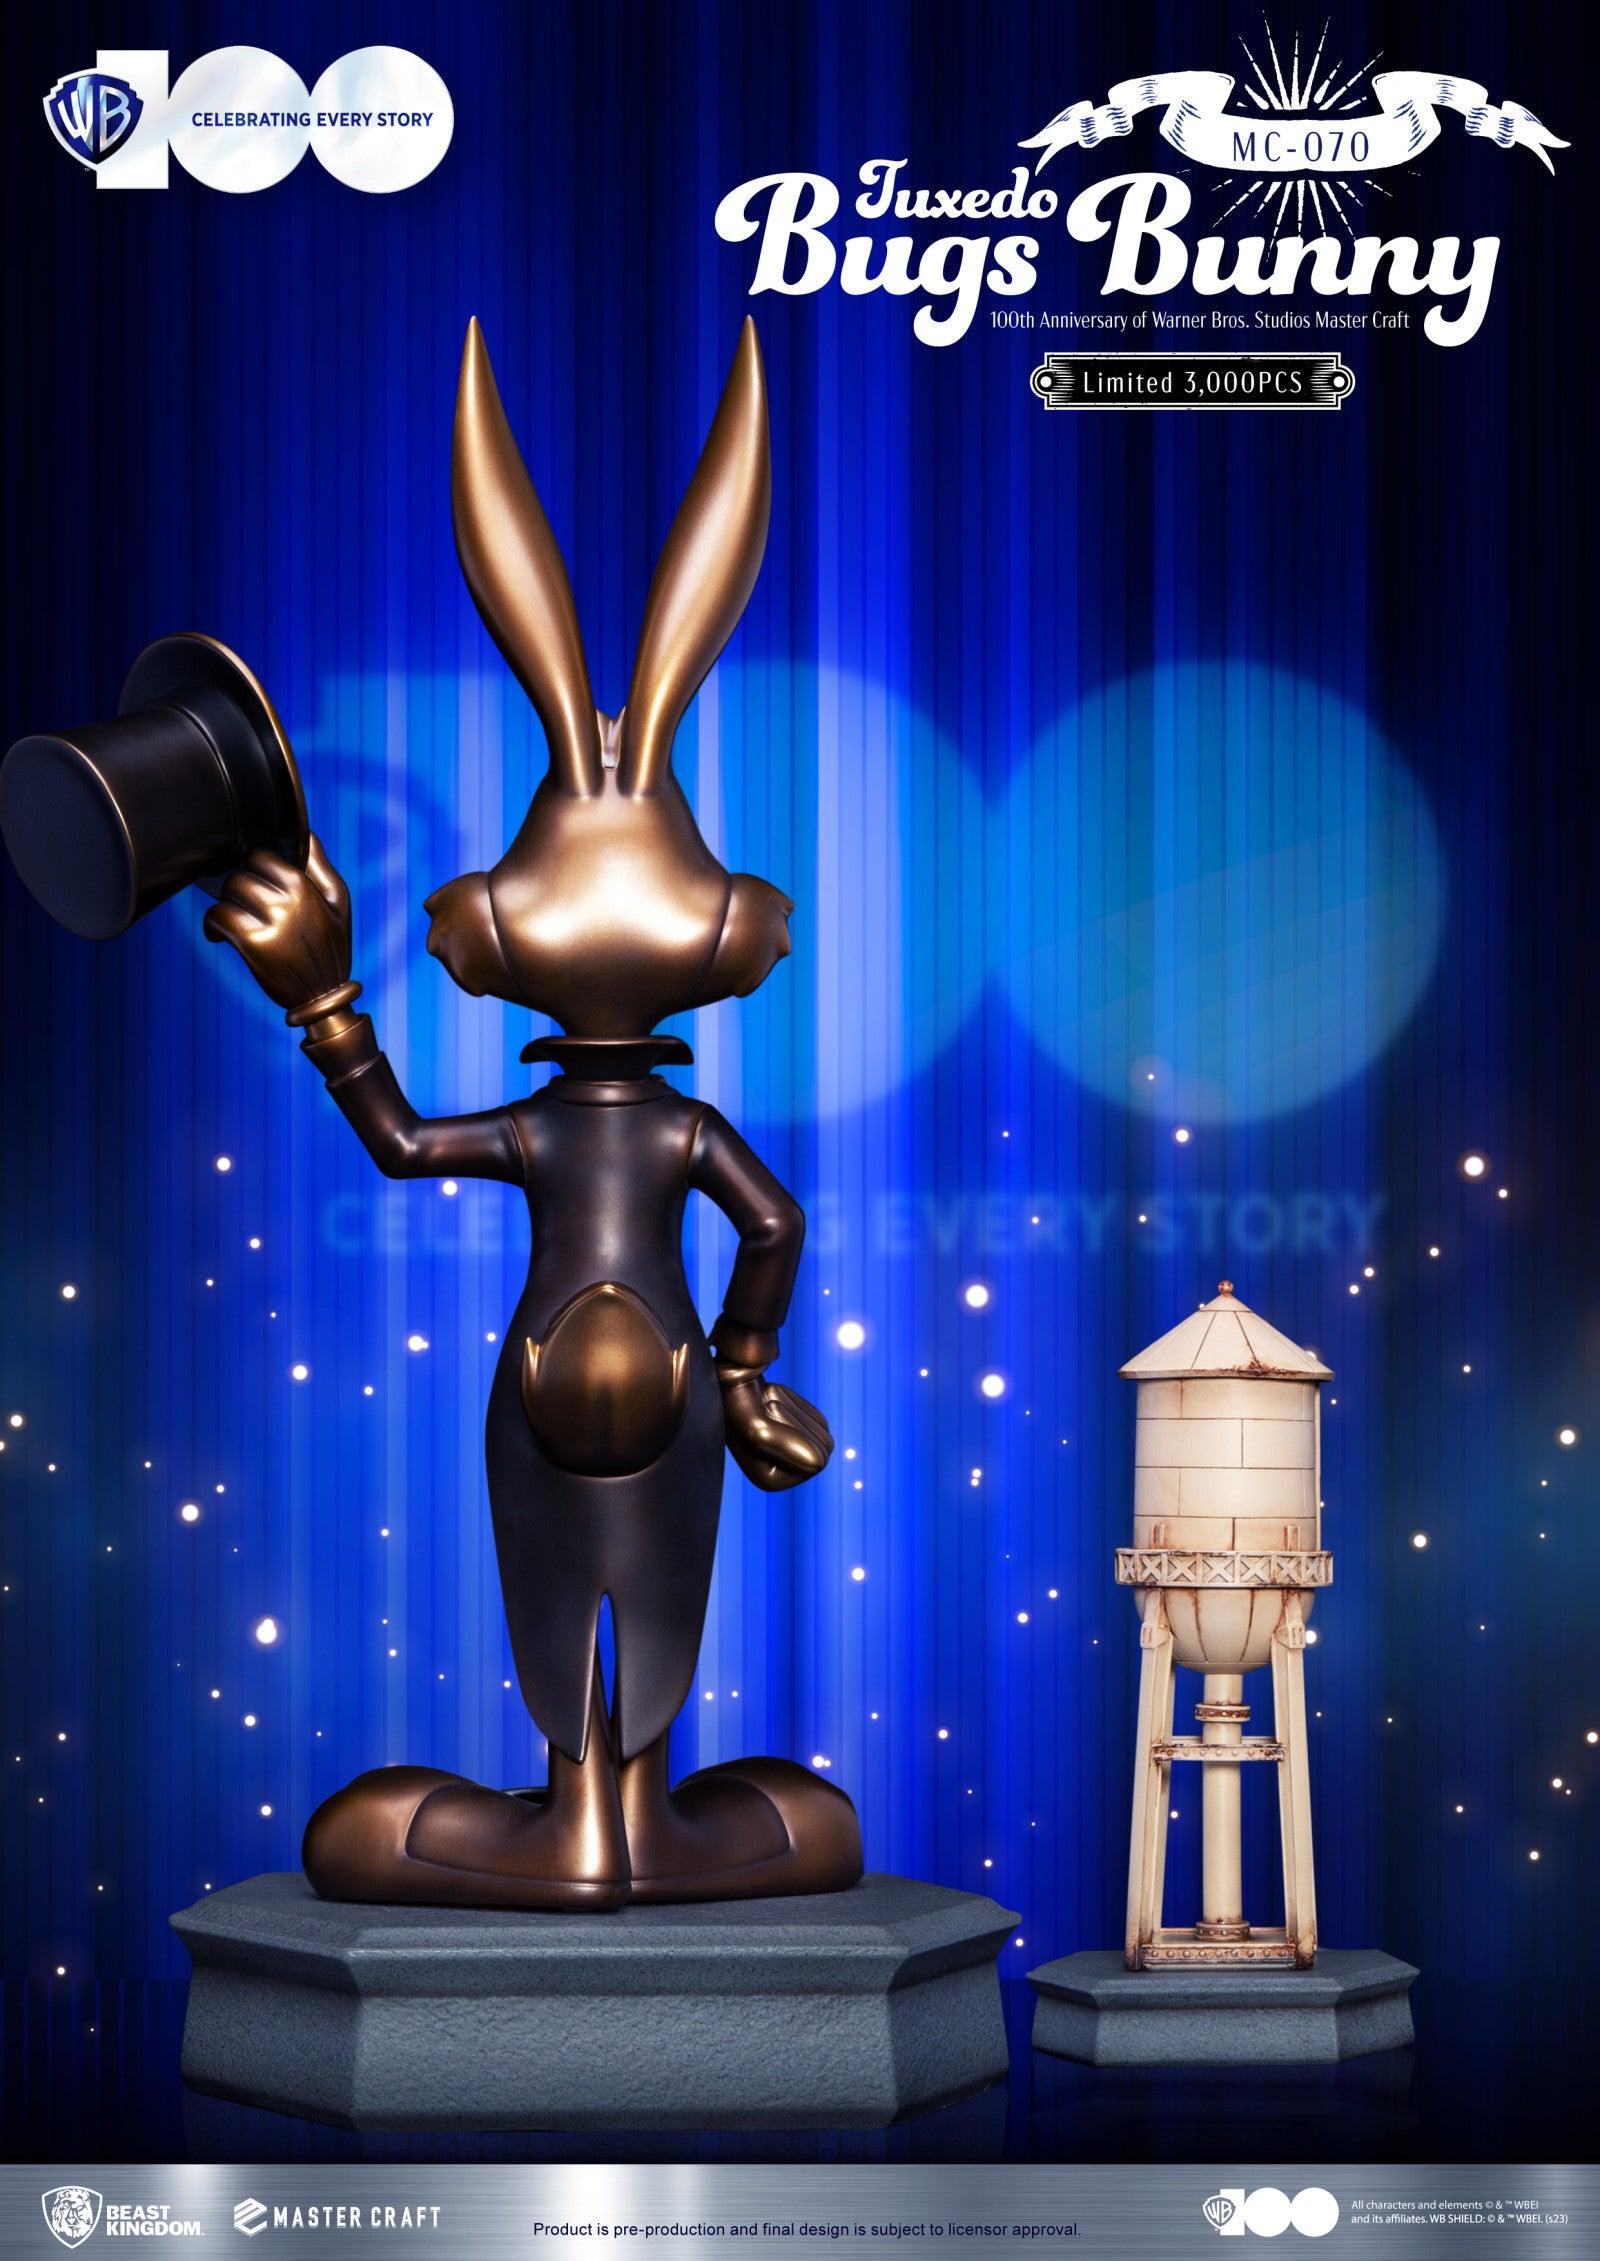 VR-112355 Beast Kingdom Master Craft 100th Anniversary of Warner Bros Studios Tuxedo Bugs Bunny - Beast Kingdom - Titan Pop Culture